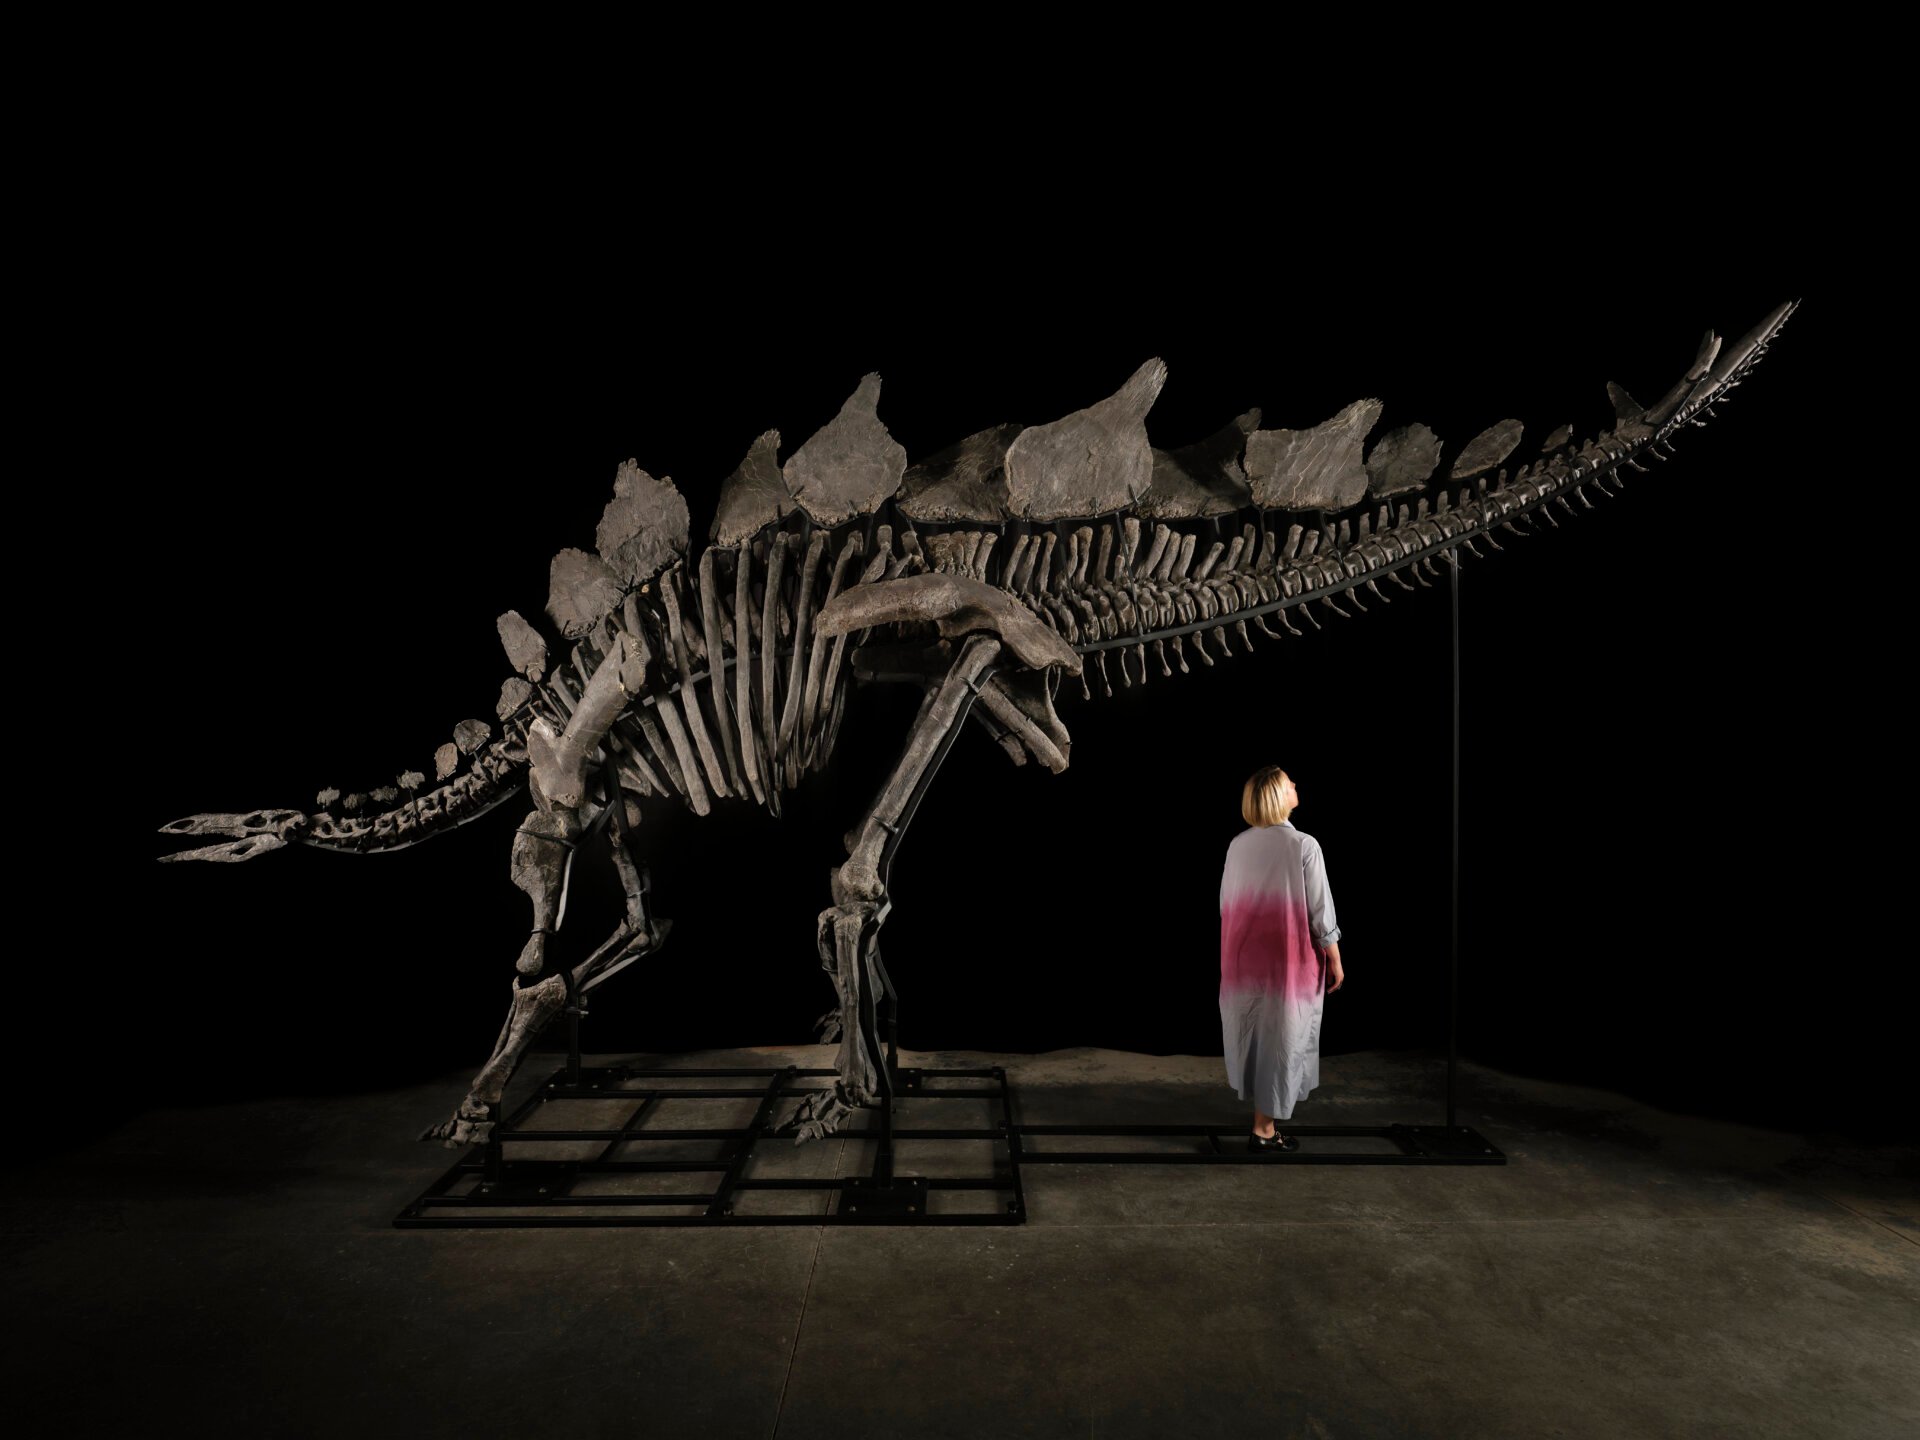 Stegosaurus Fossil Sells to Hedge Fund Billionaire for Record-Breaking $45 Million